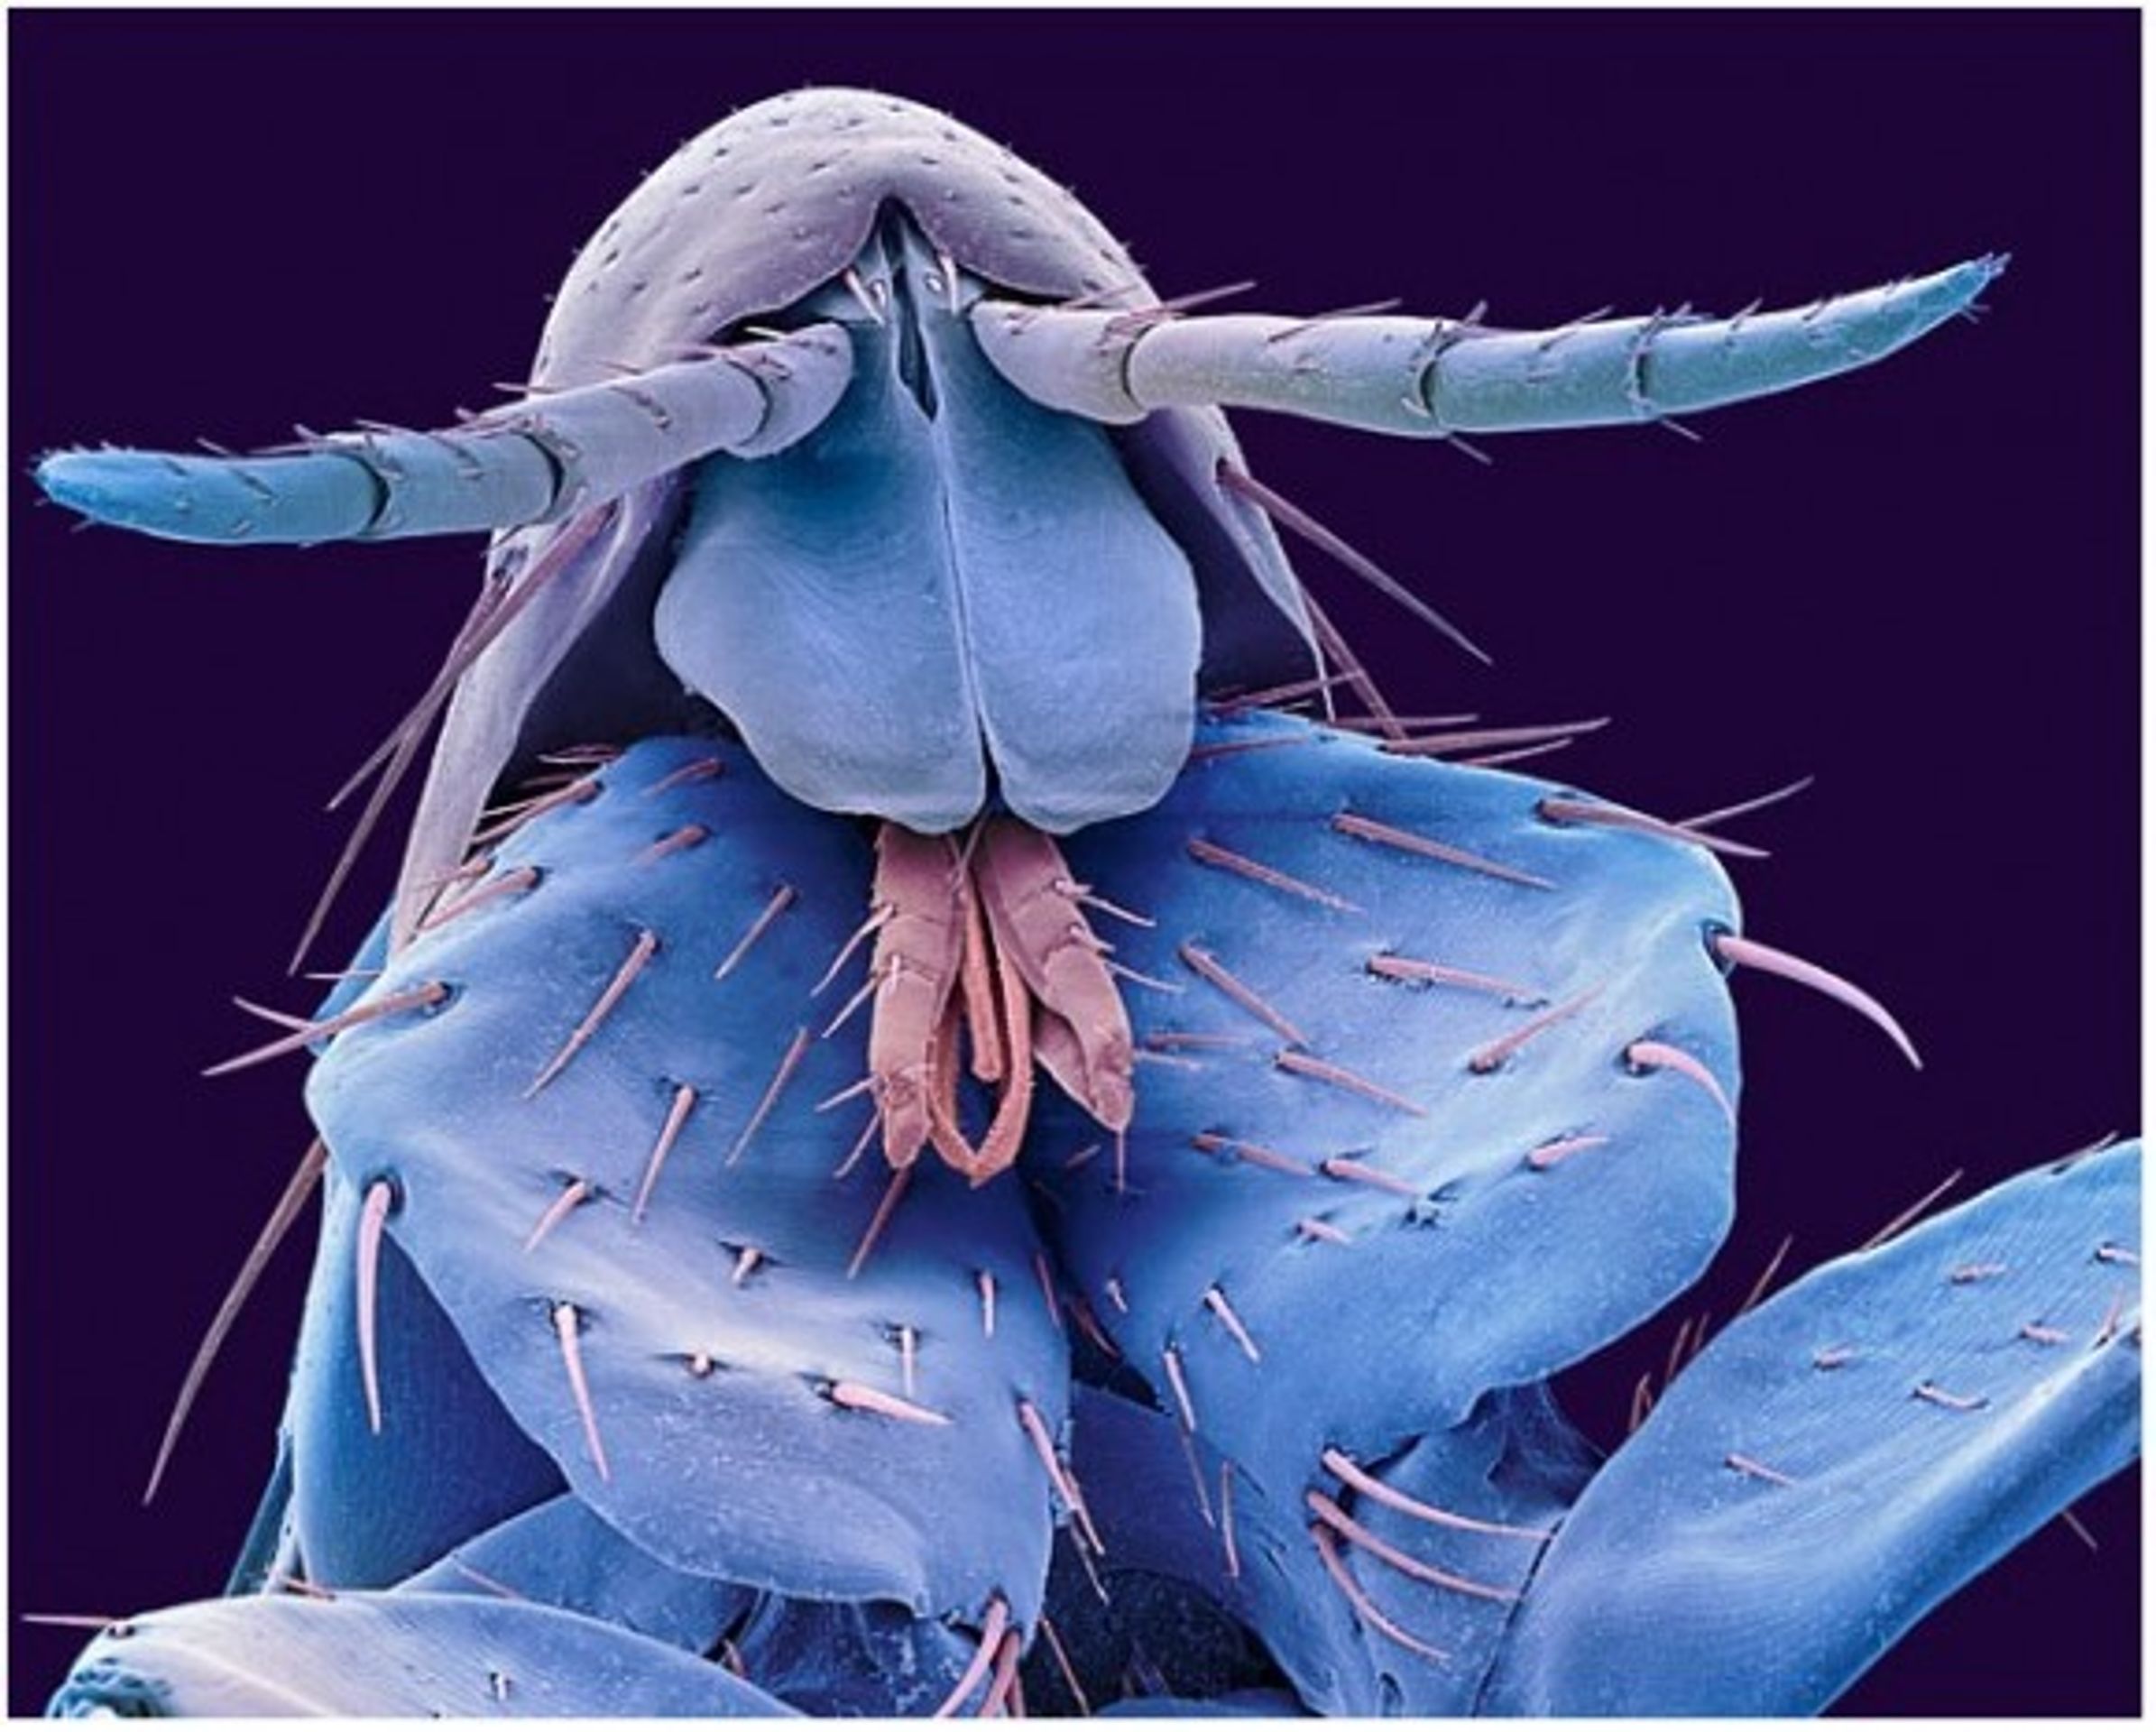 Hmyz pod elektronovým mikroskopem - 14 - GALERIE: Hmyz pod elektronovým mikroskopem (8/20)